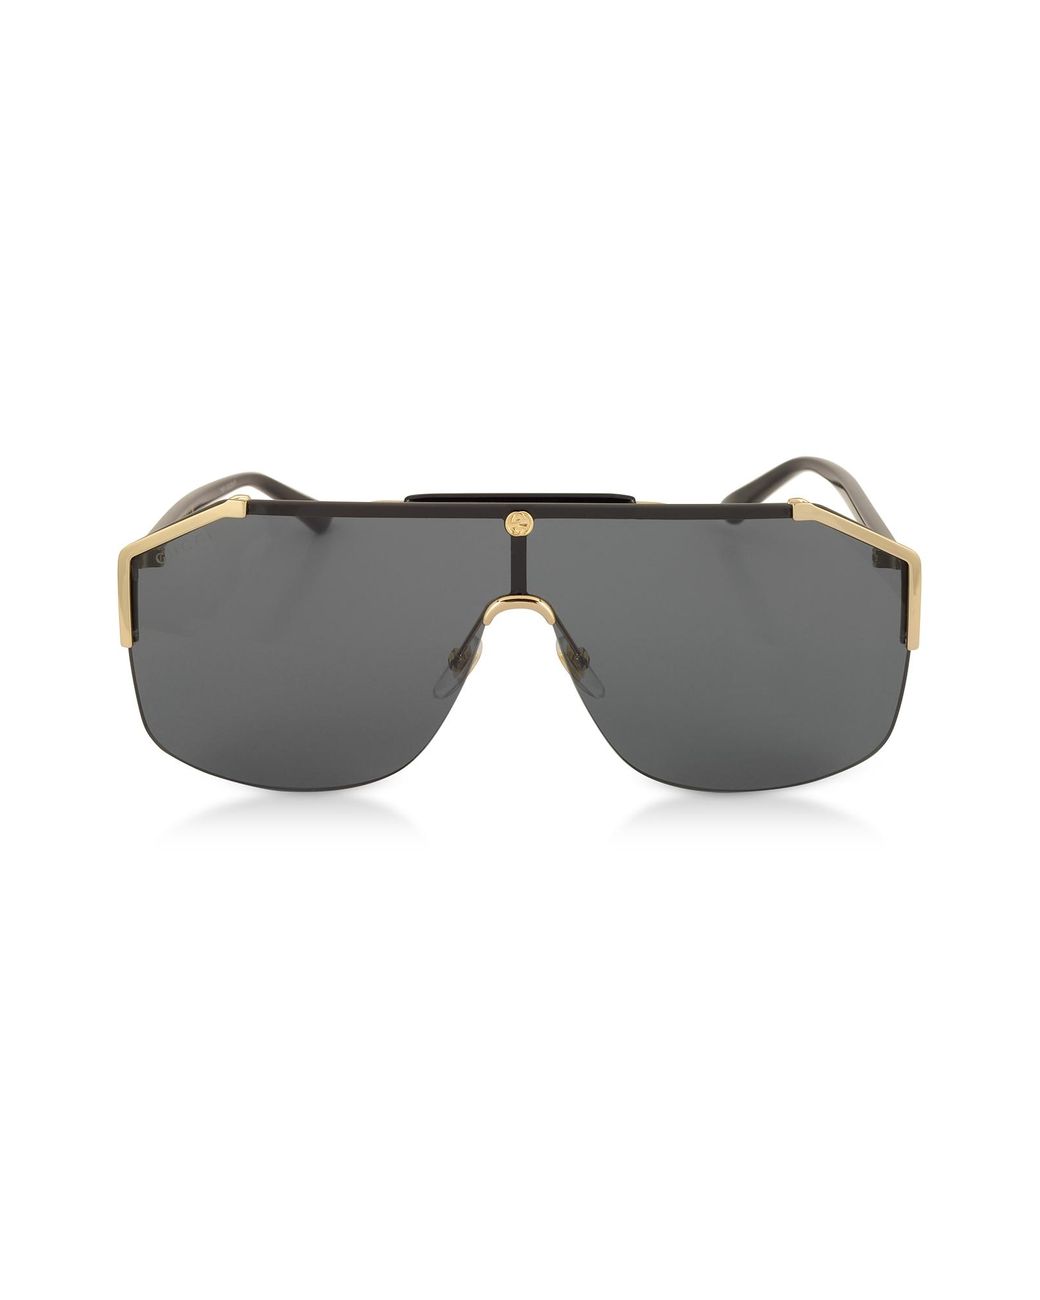 Gucci GG0291S Rectangular-frame Gold Metal Sunglasses for Men - Lyst